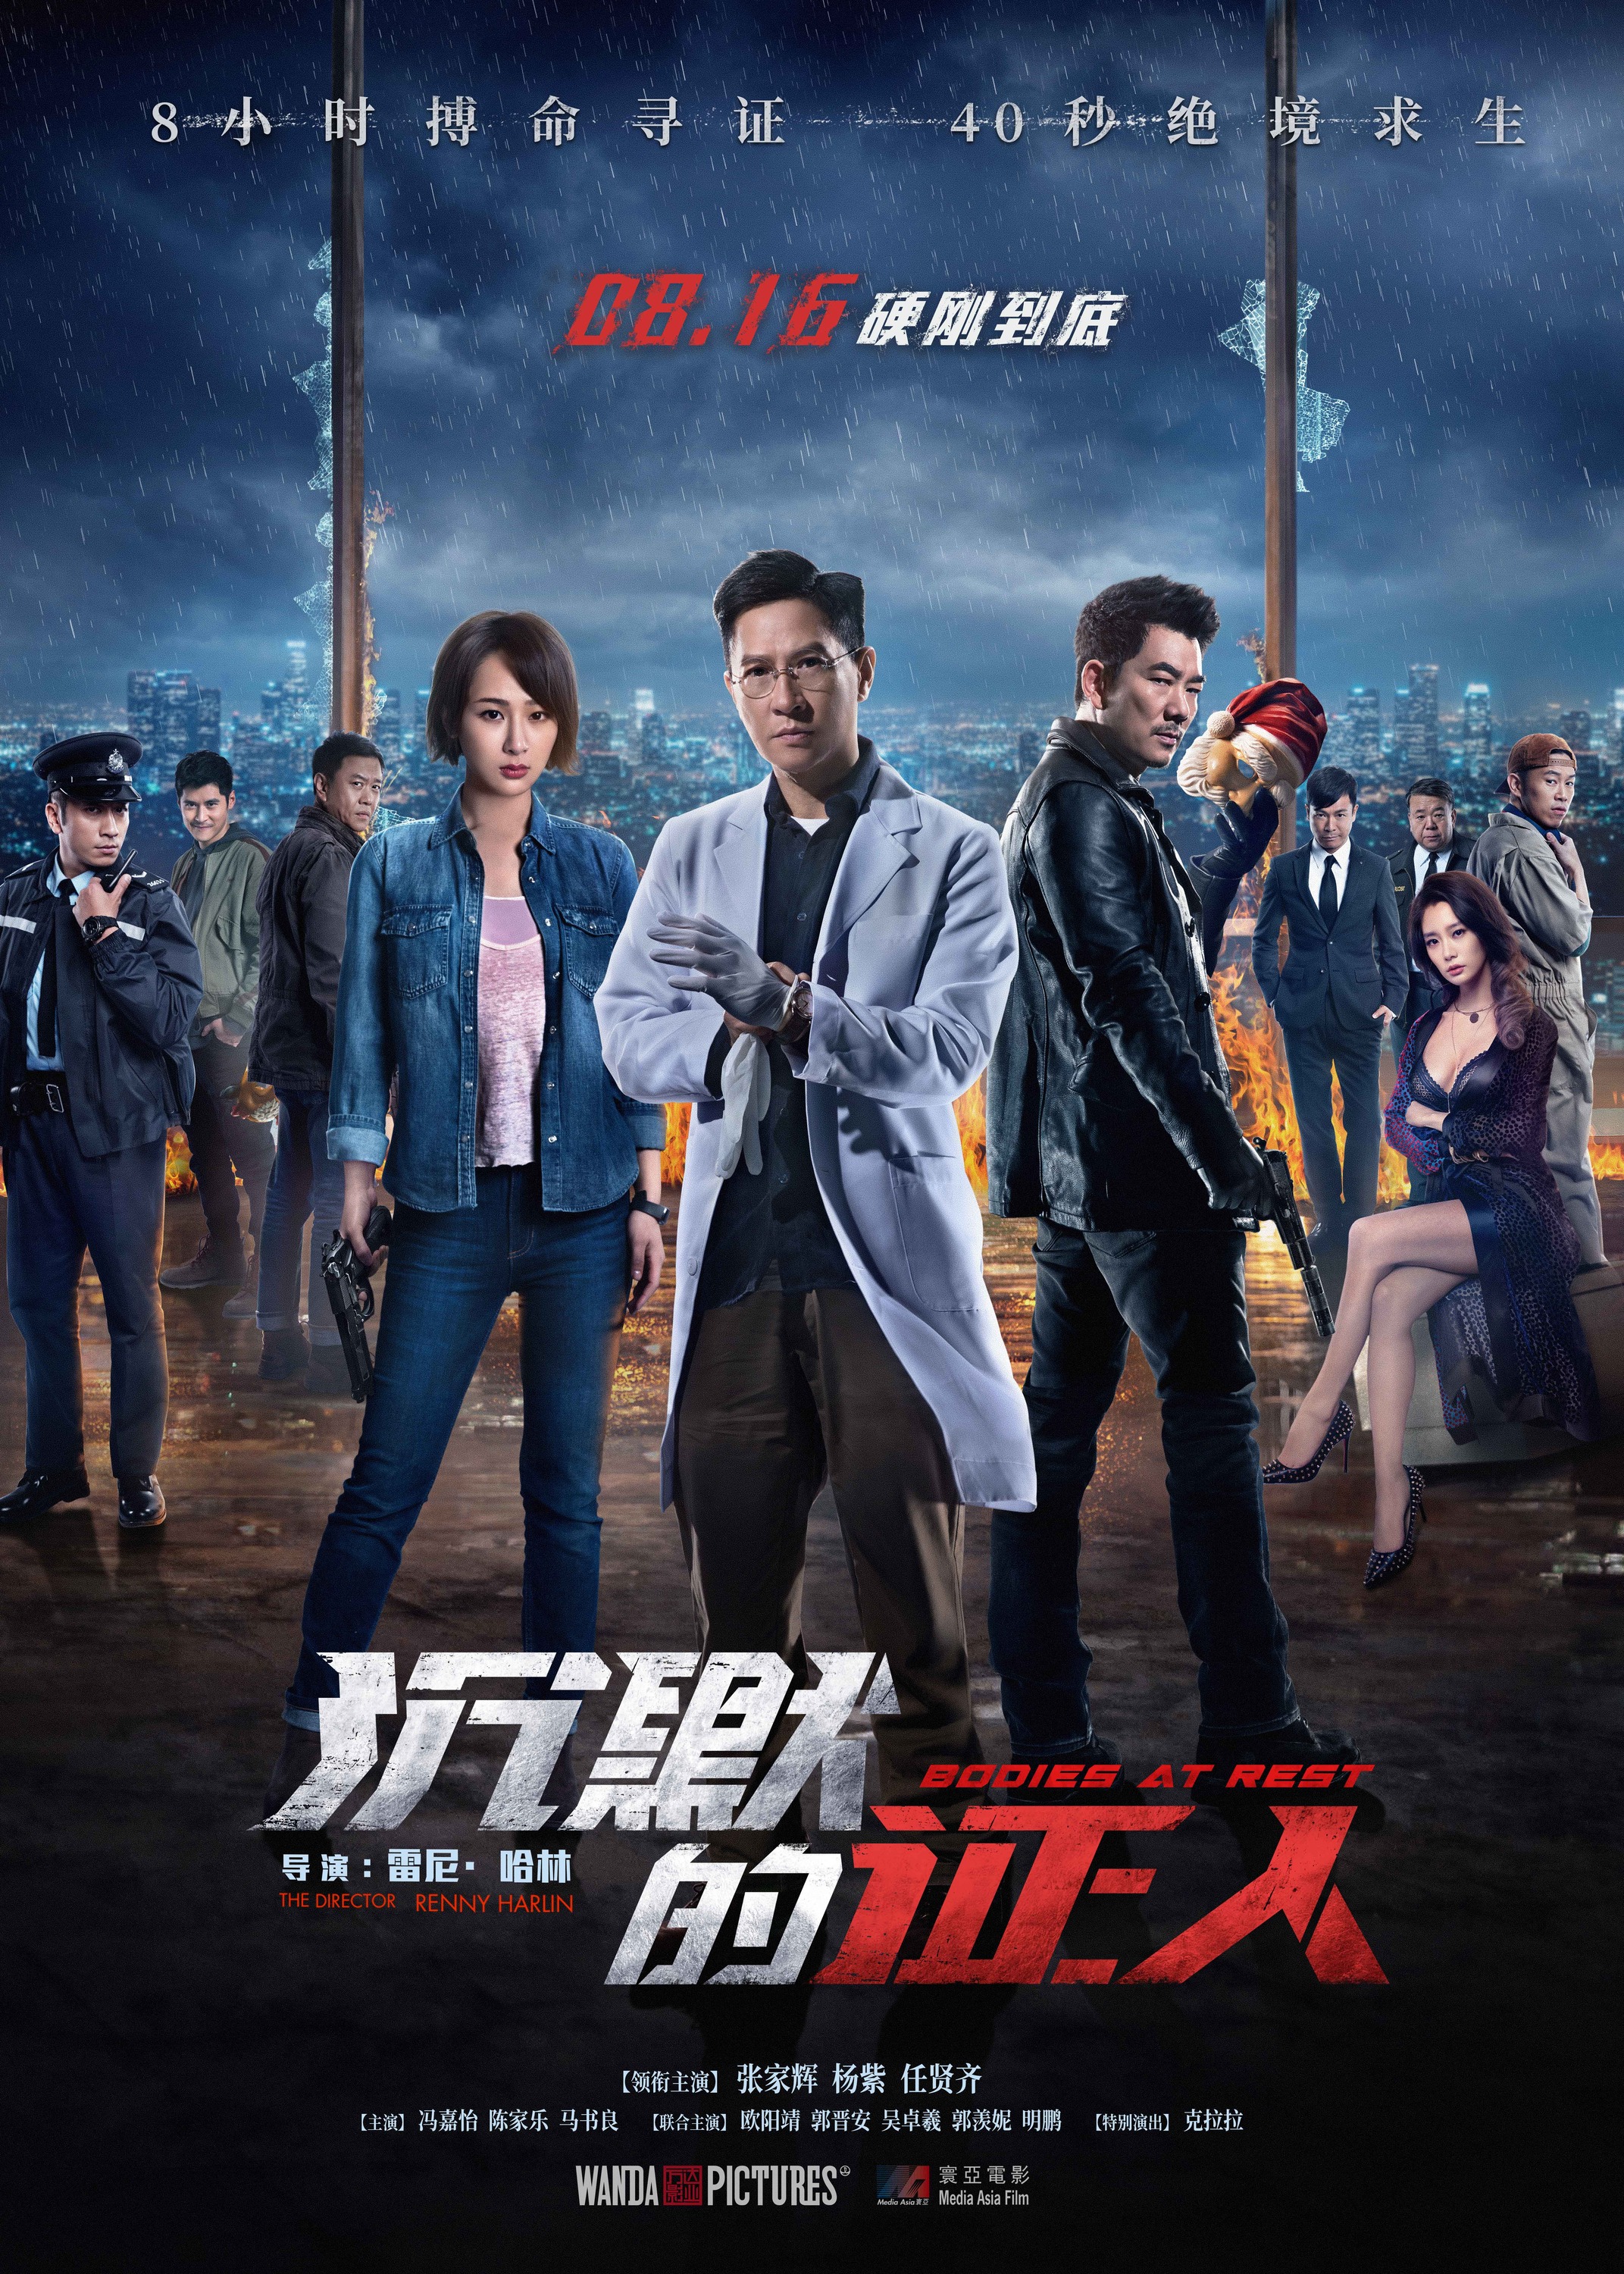 Mega Sized Movie Poster Image for Chen mo de zheng ren (#1 of 2)